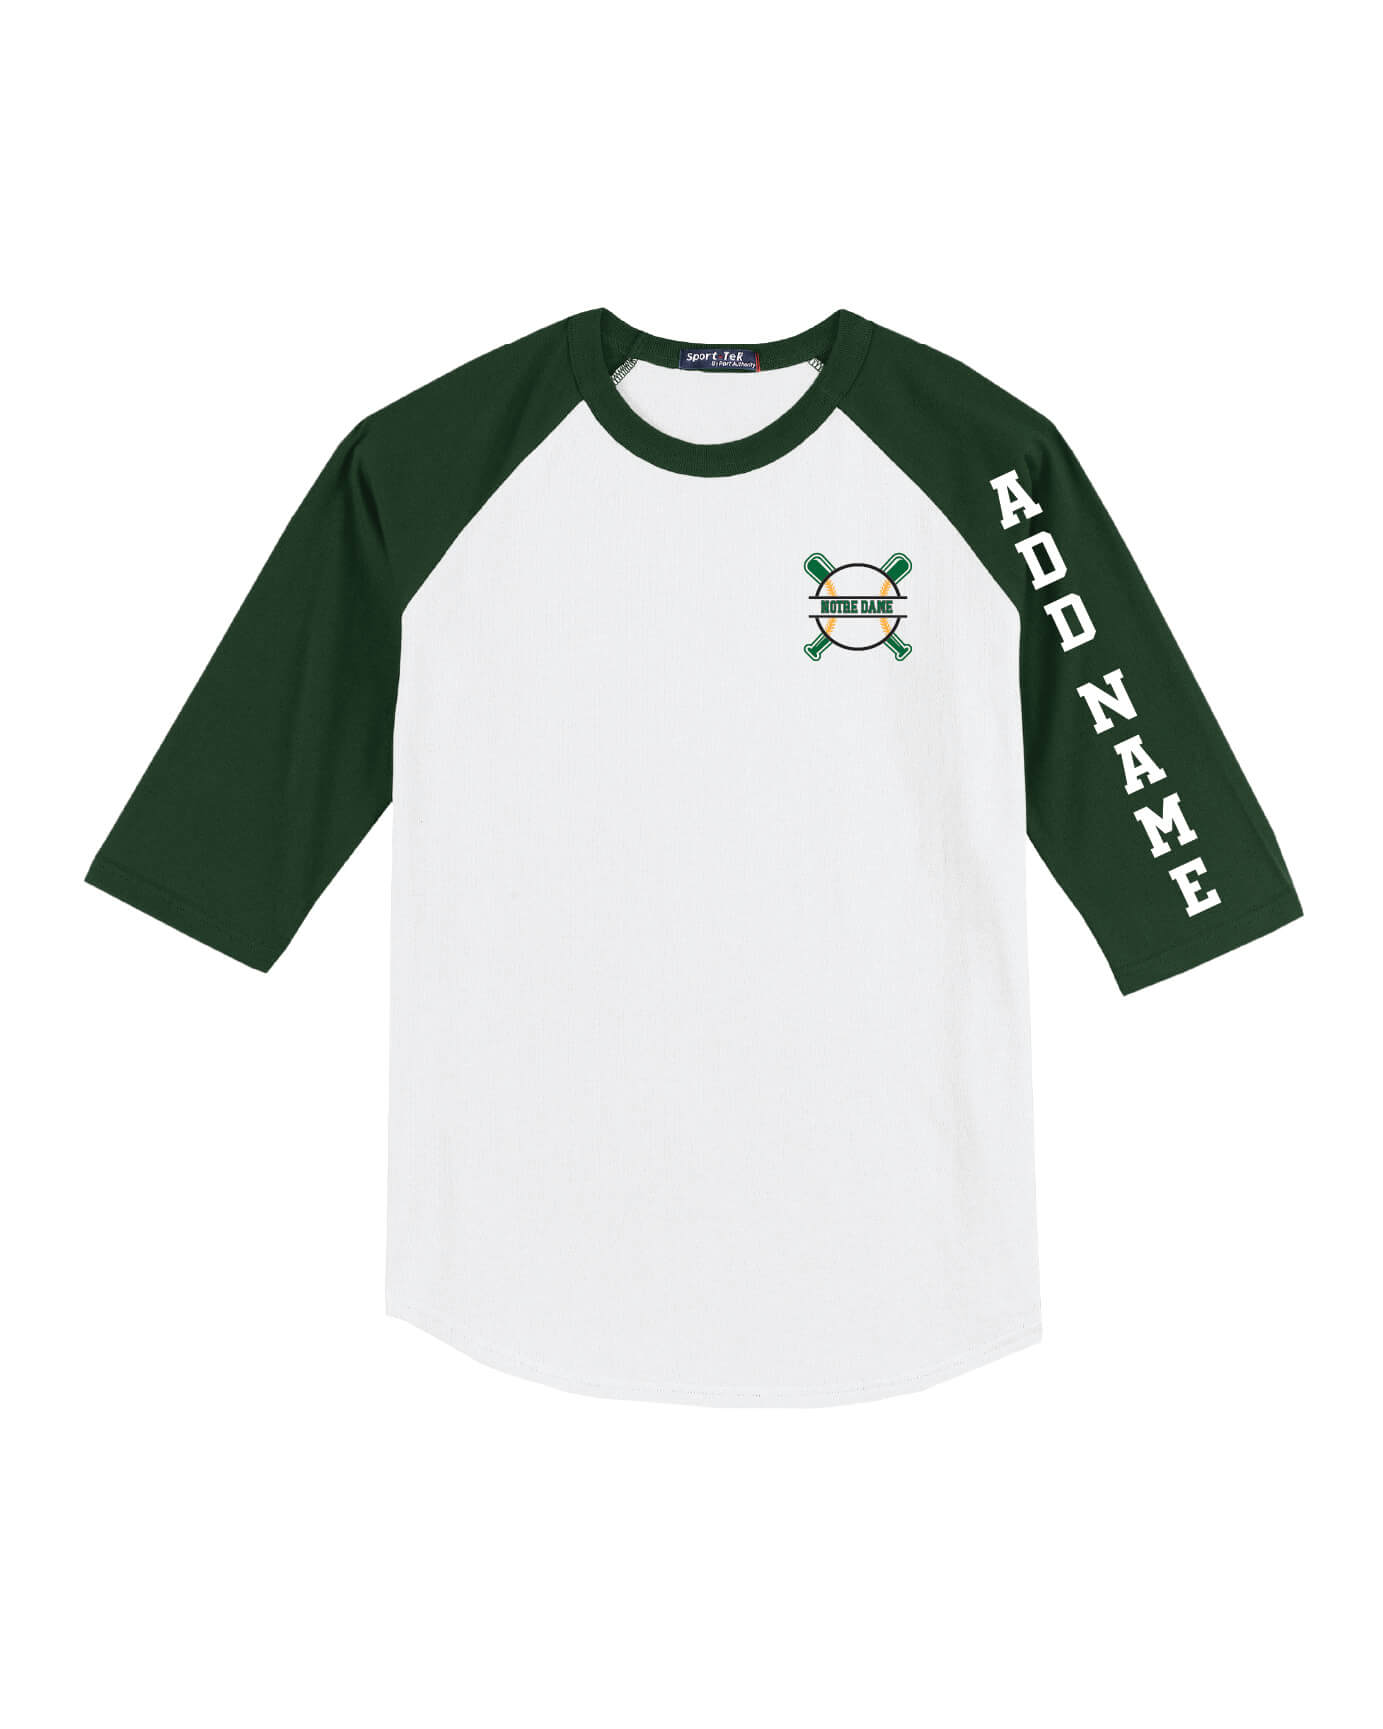 Spartans Baseball Sport Tek Colorblock Raglan Jersey - green/white, front